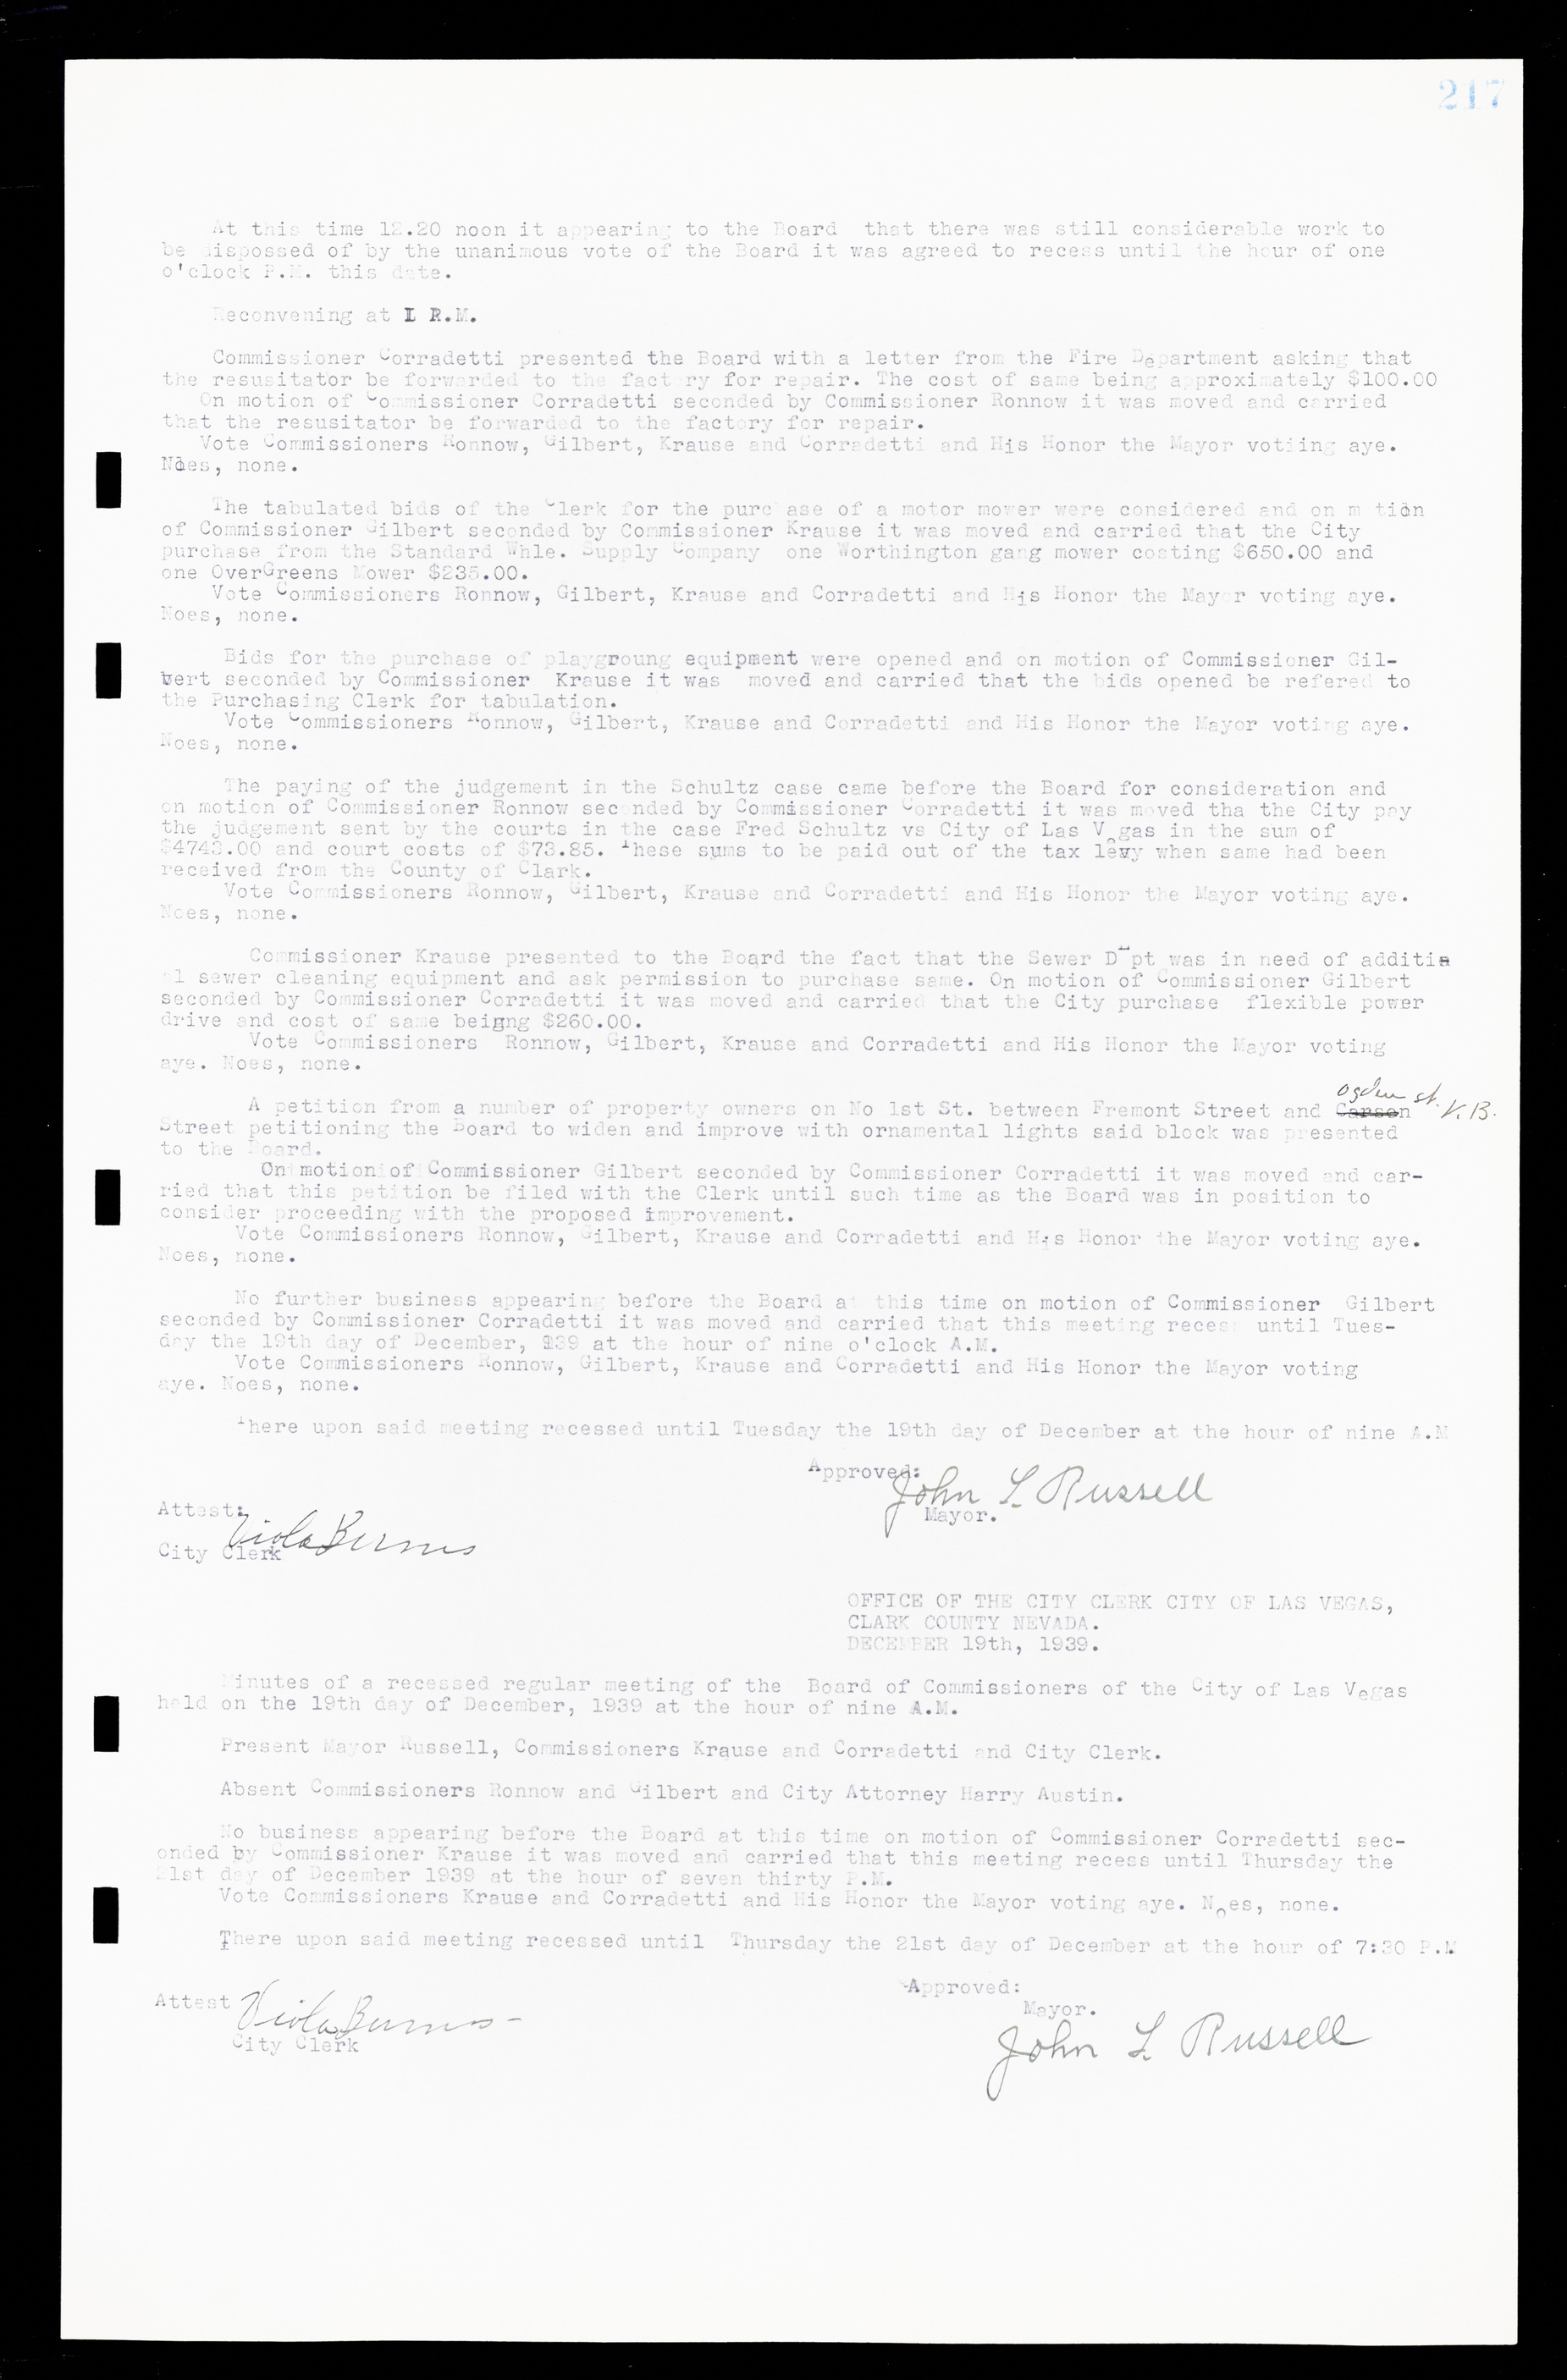 Las Vegas City Commission Minutes, February 17, 1937 to August 4, 1942, lvc000004-235